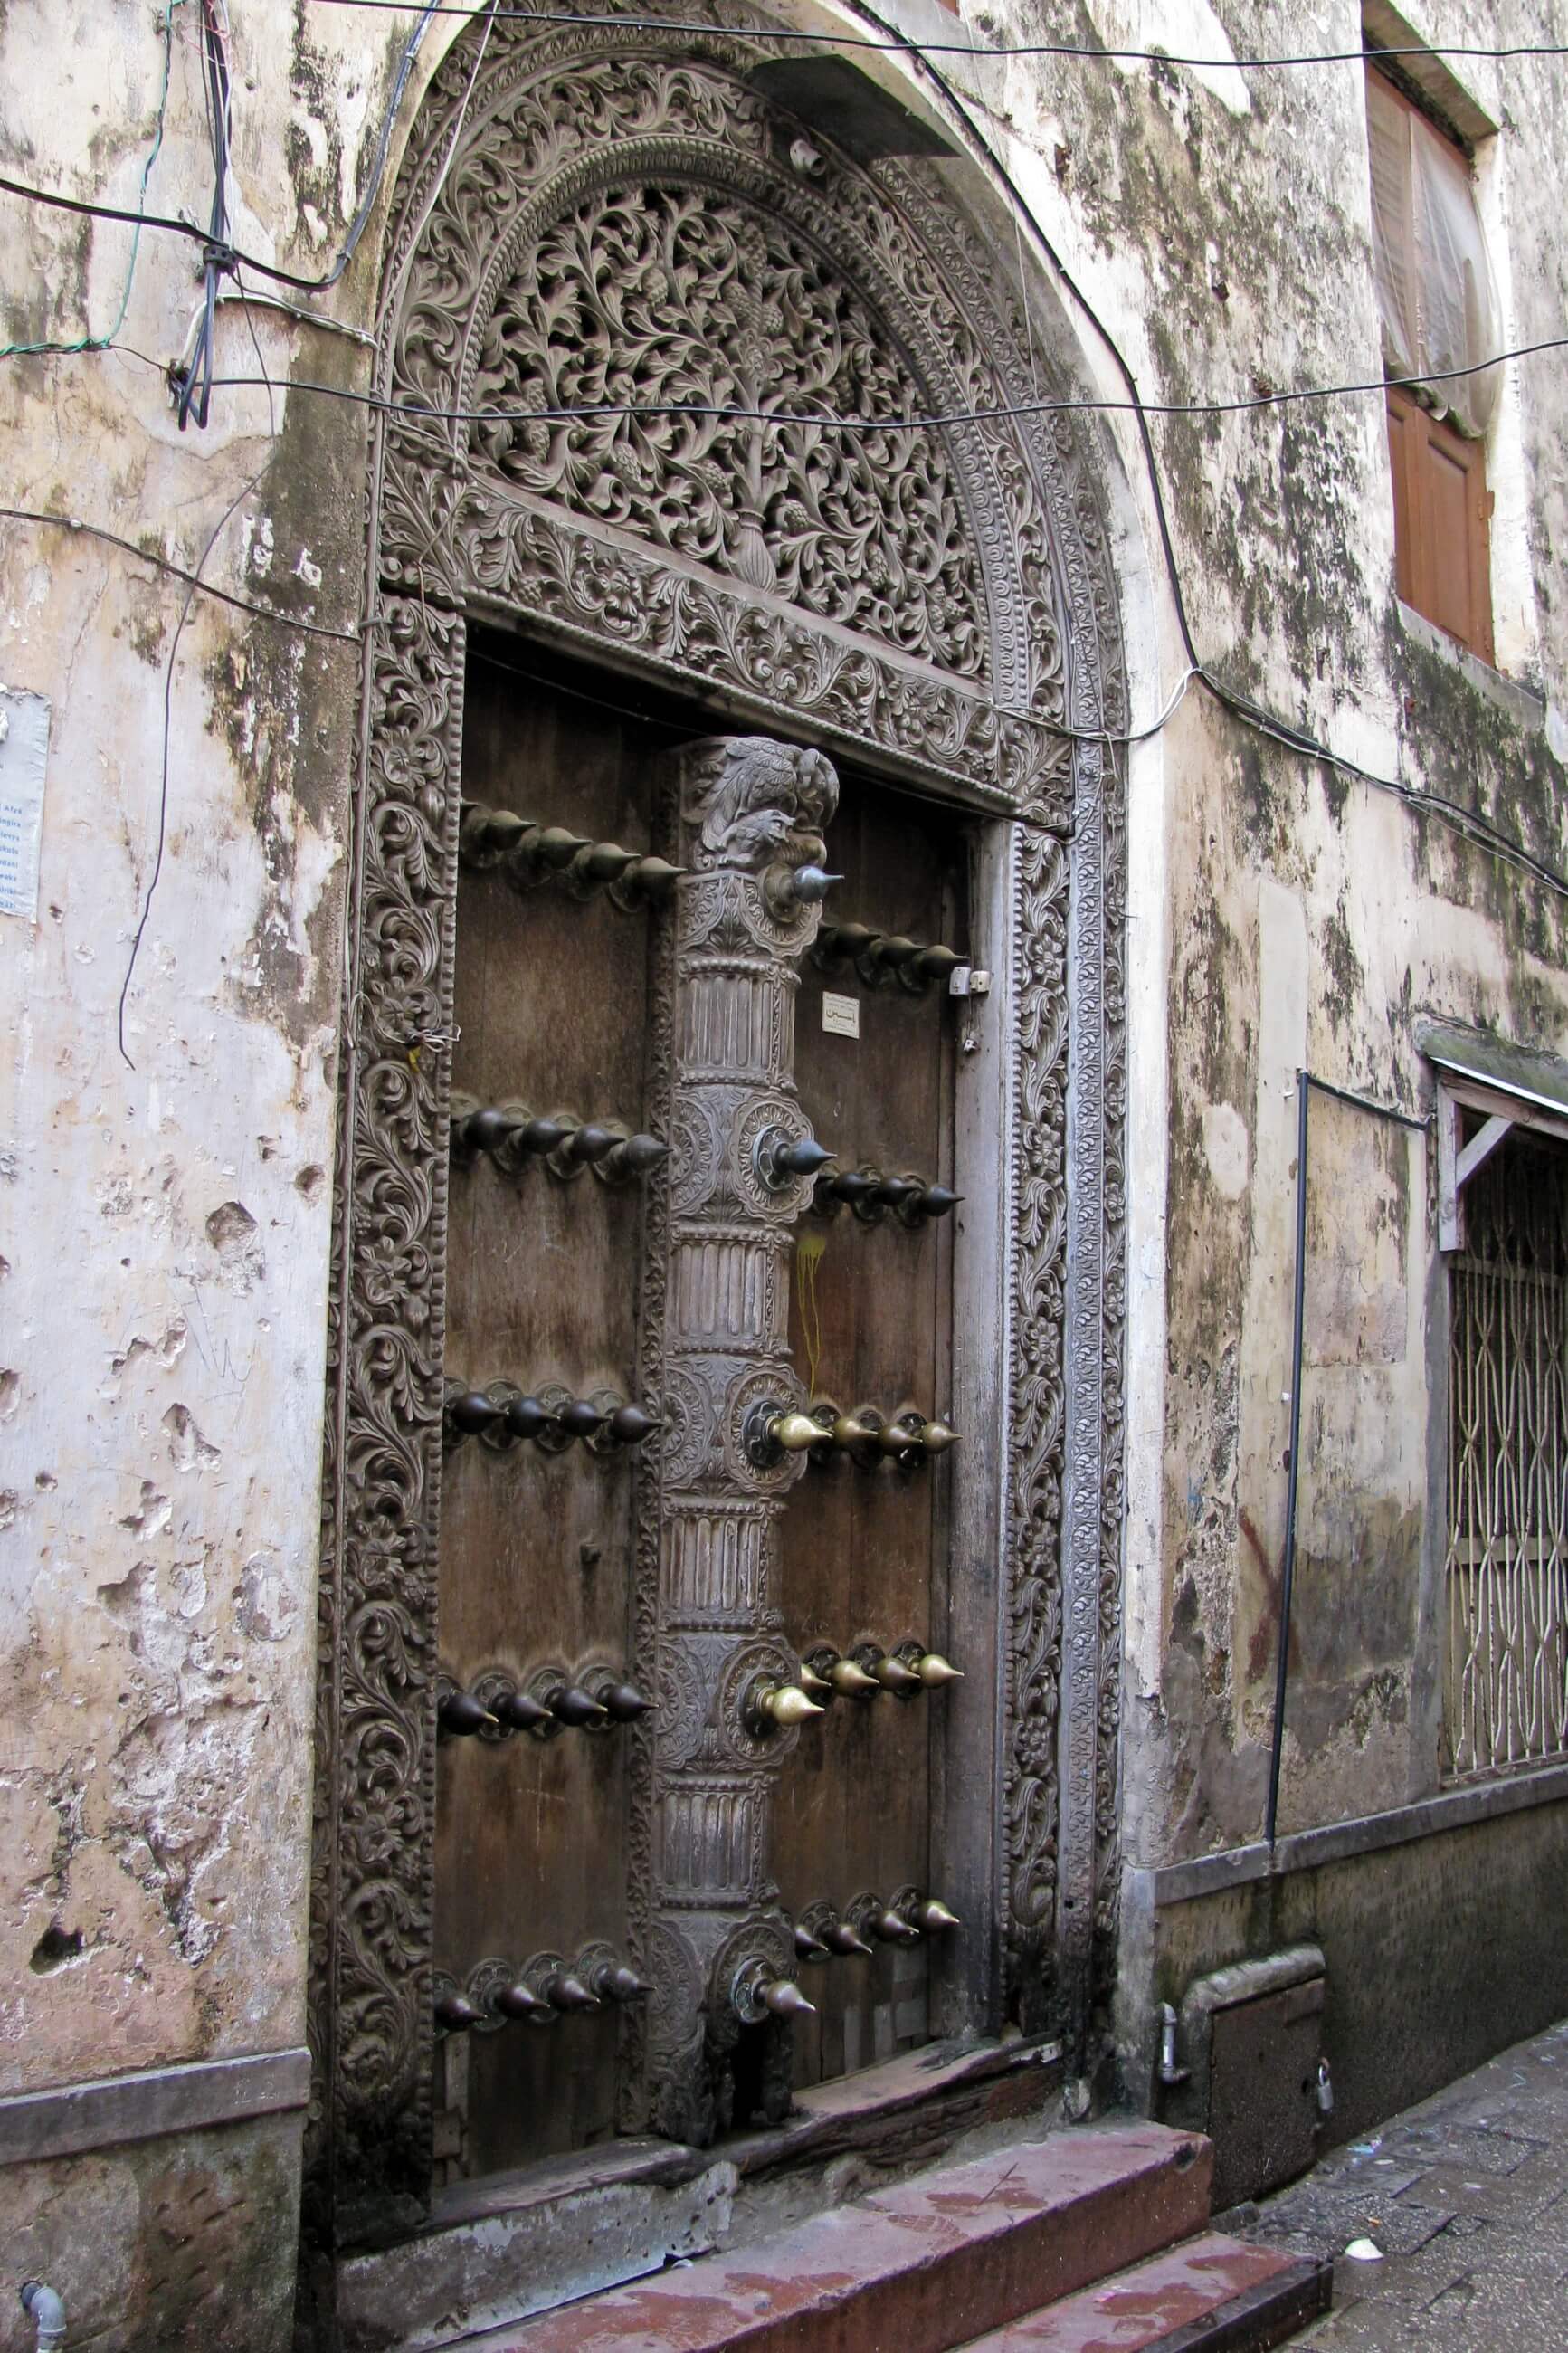 https://bubo.sk/uploads/galleries/16285/martin_karnis_stone_town_door_zanzibar.jpg